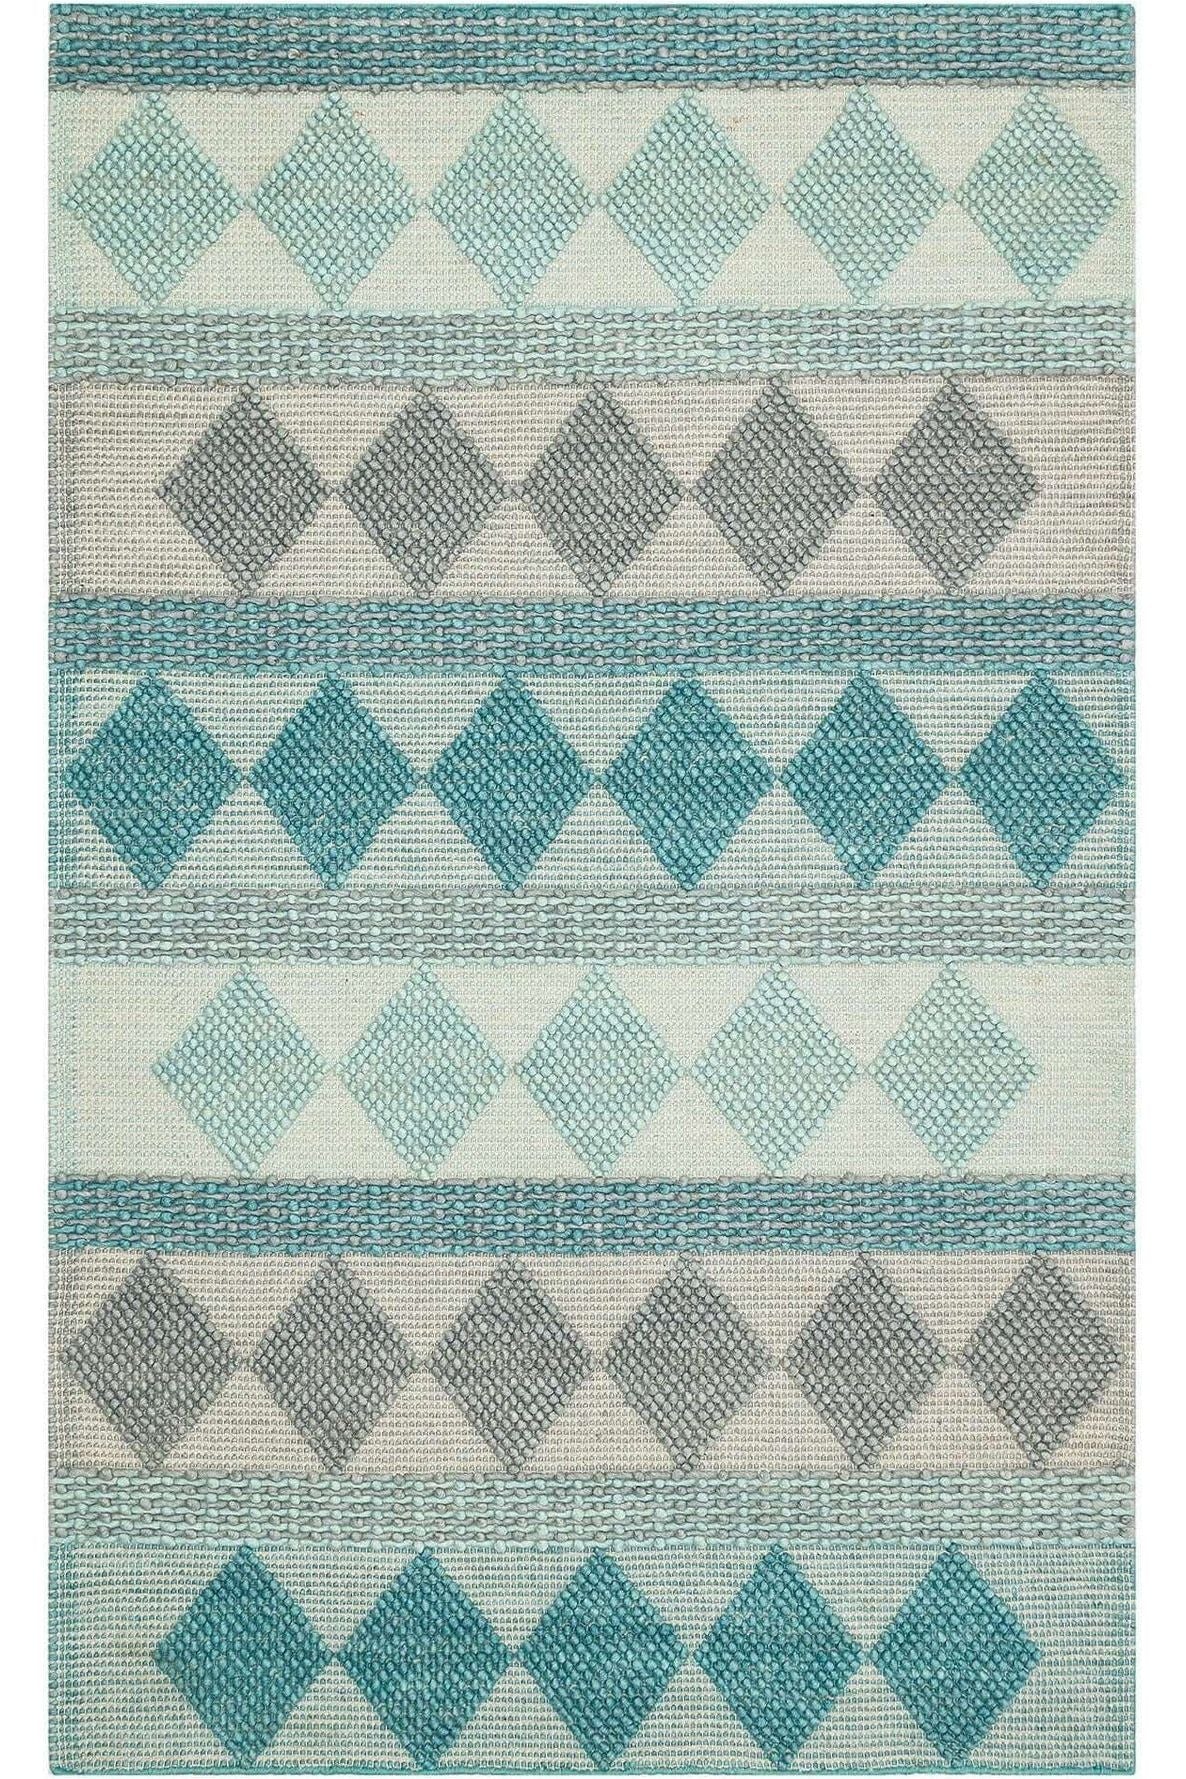 #Turkish_Carpets_Rugs# #Modern_Carpets# #Abrash_Carpets#Jd 01 Blue